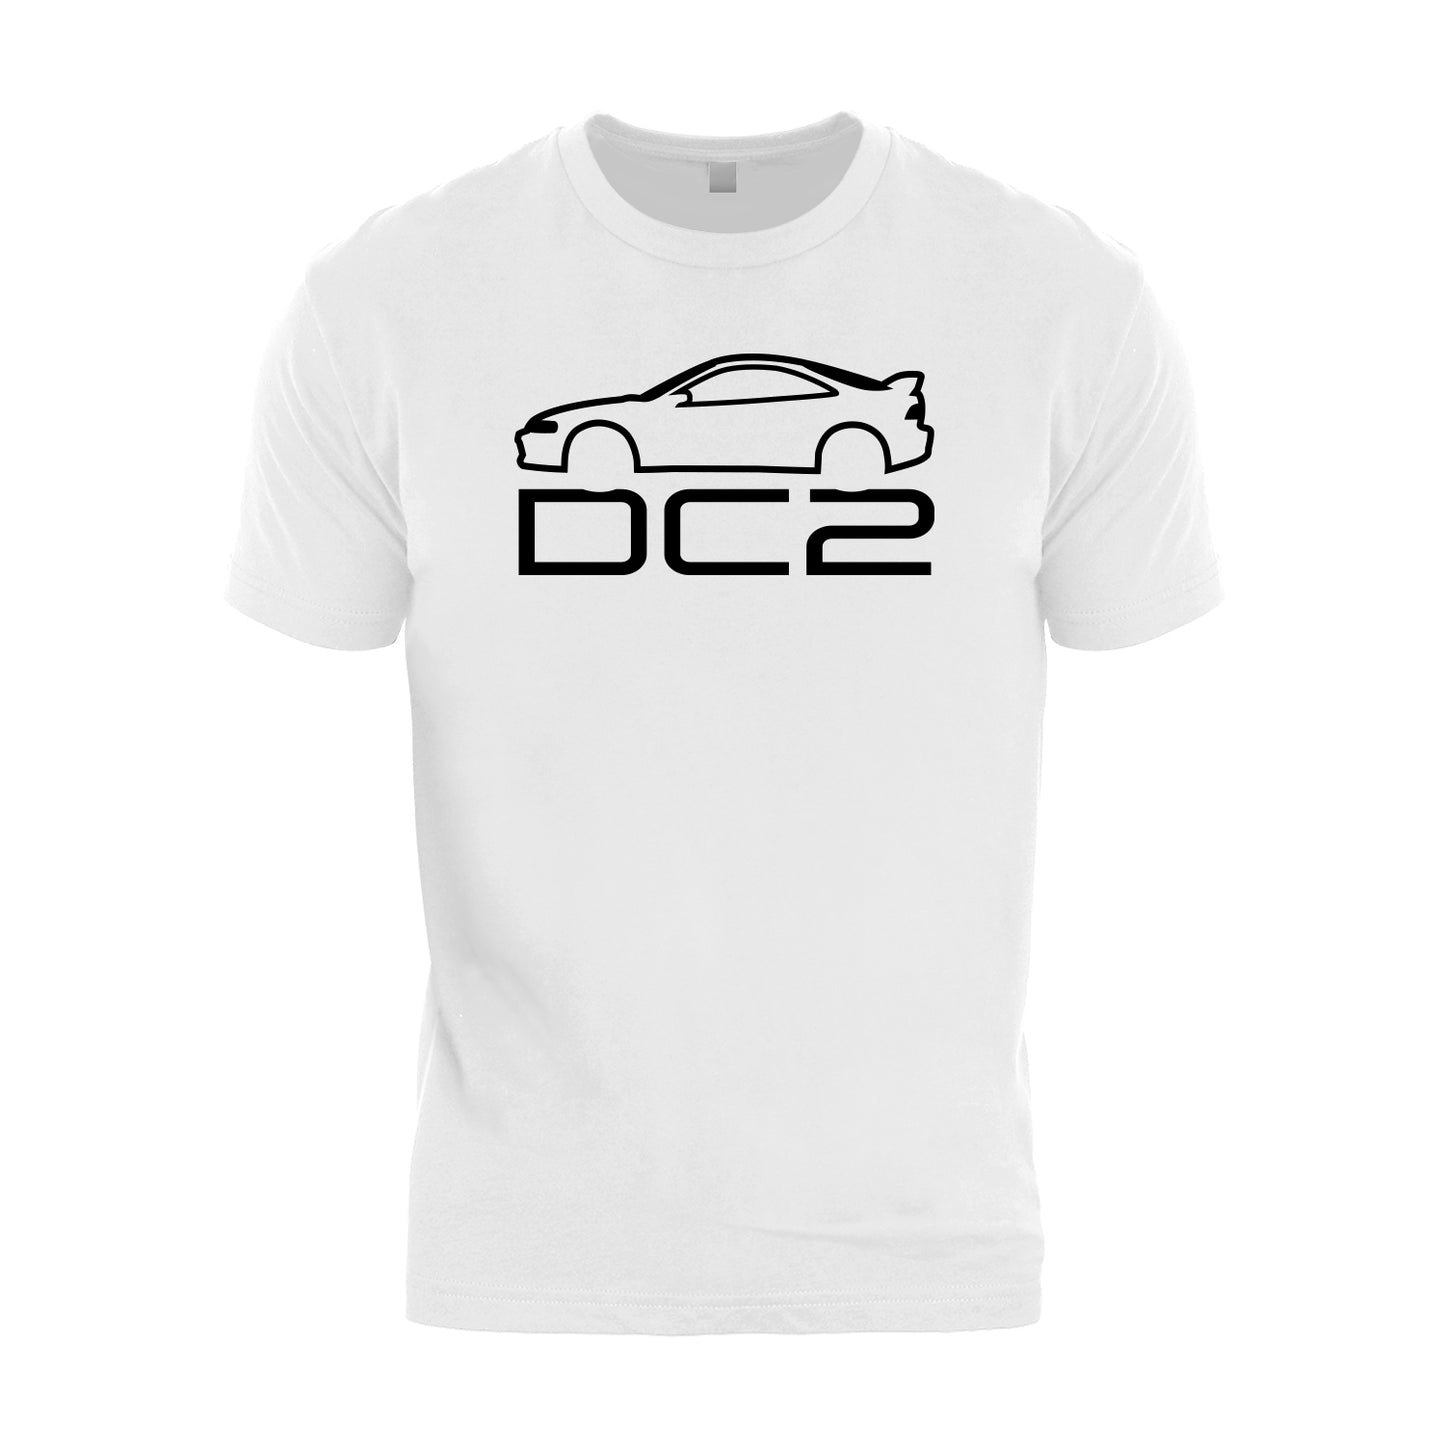 DC2 Integra Inspired Silhouette T-Shirt